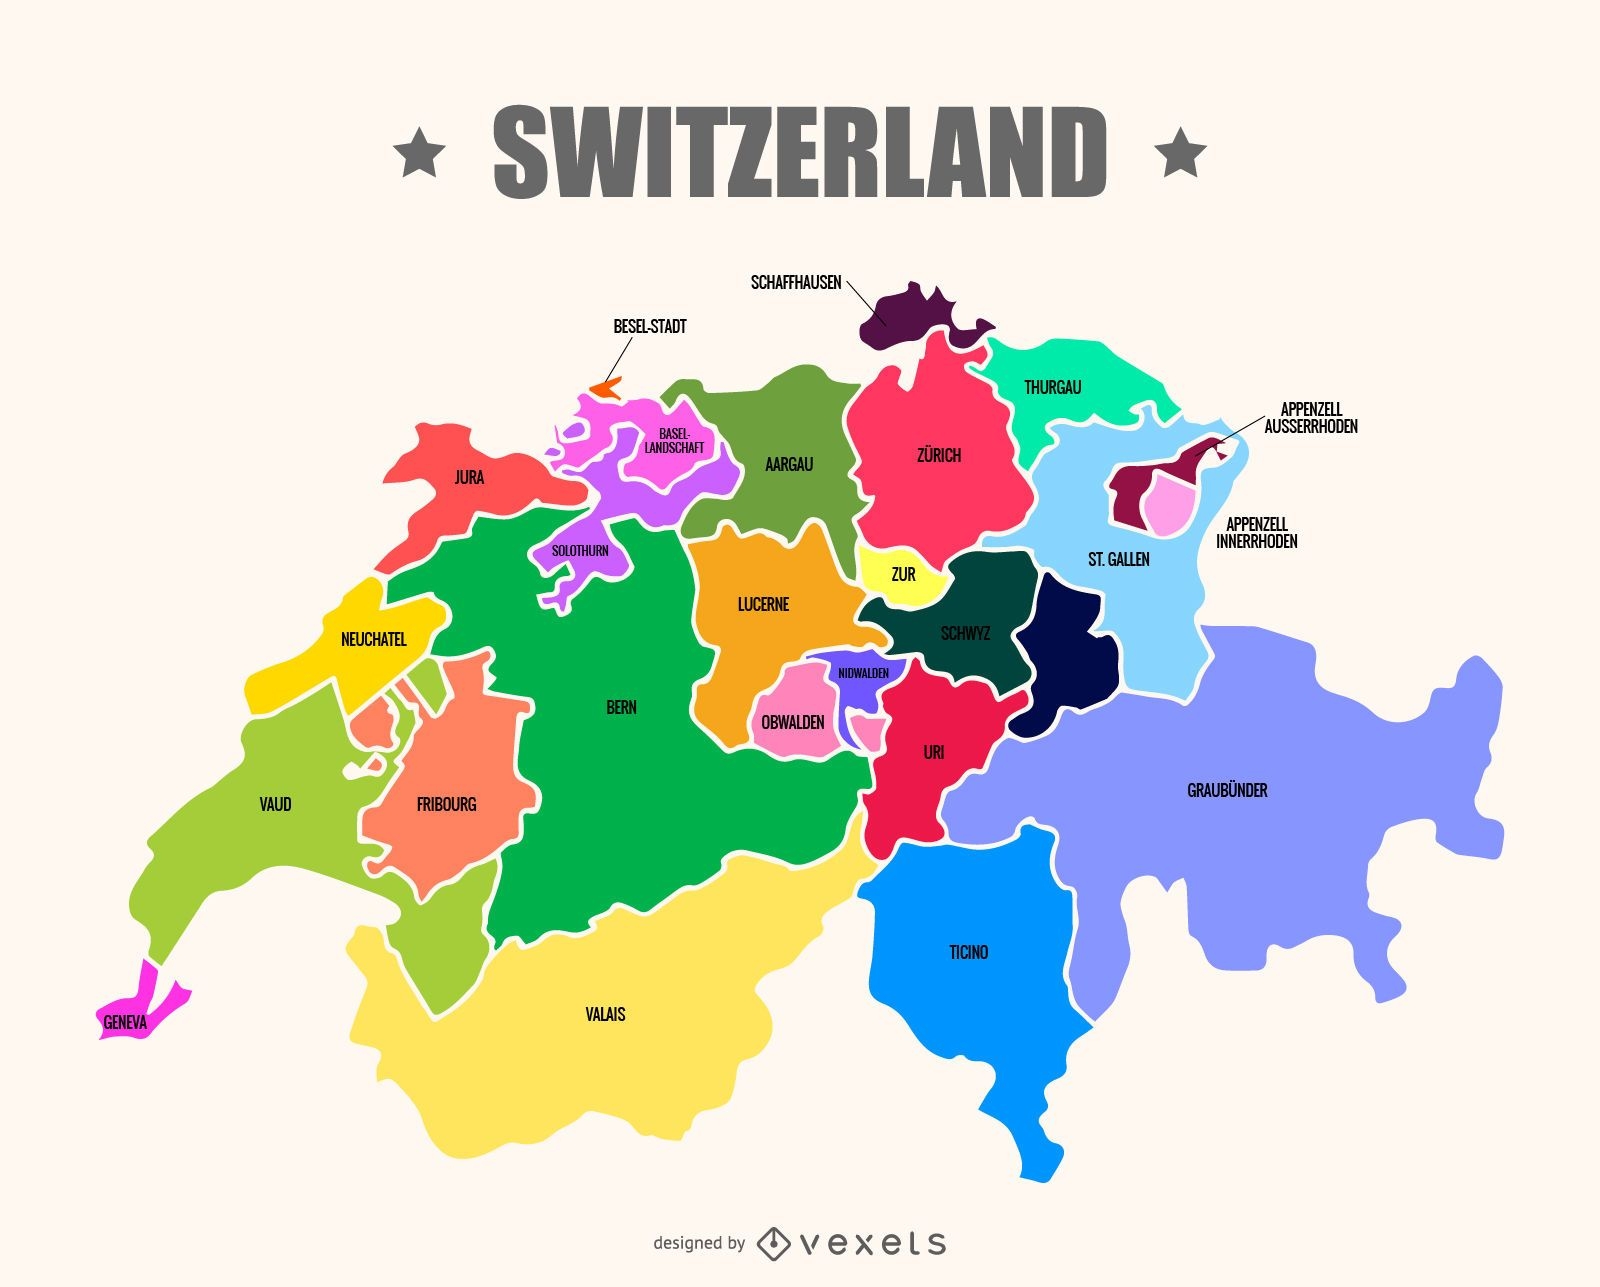 Vetor do mapa da Suíça